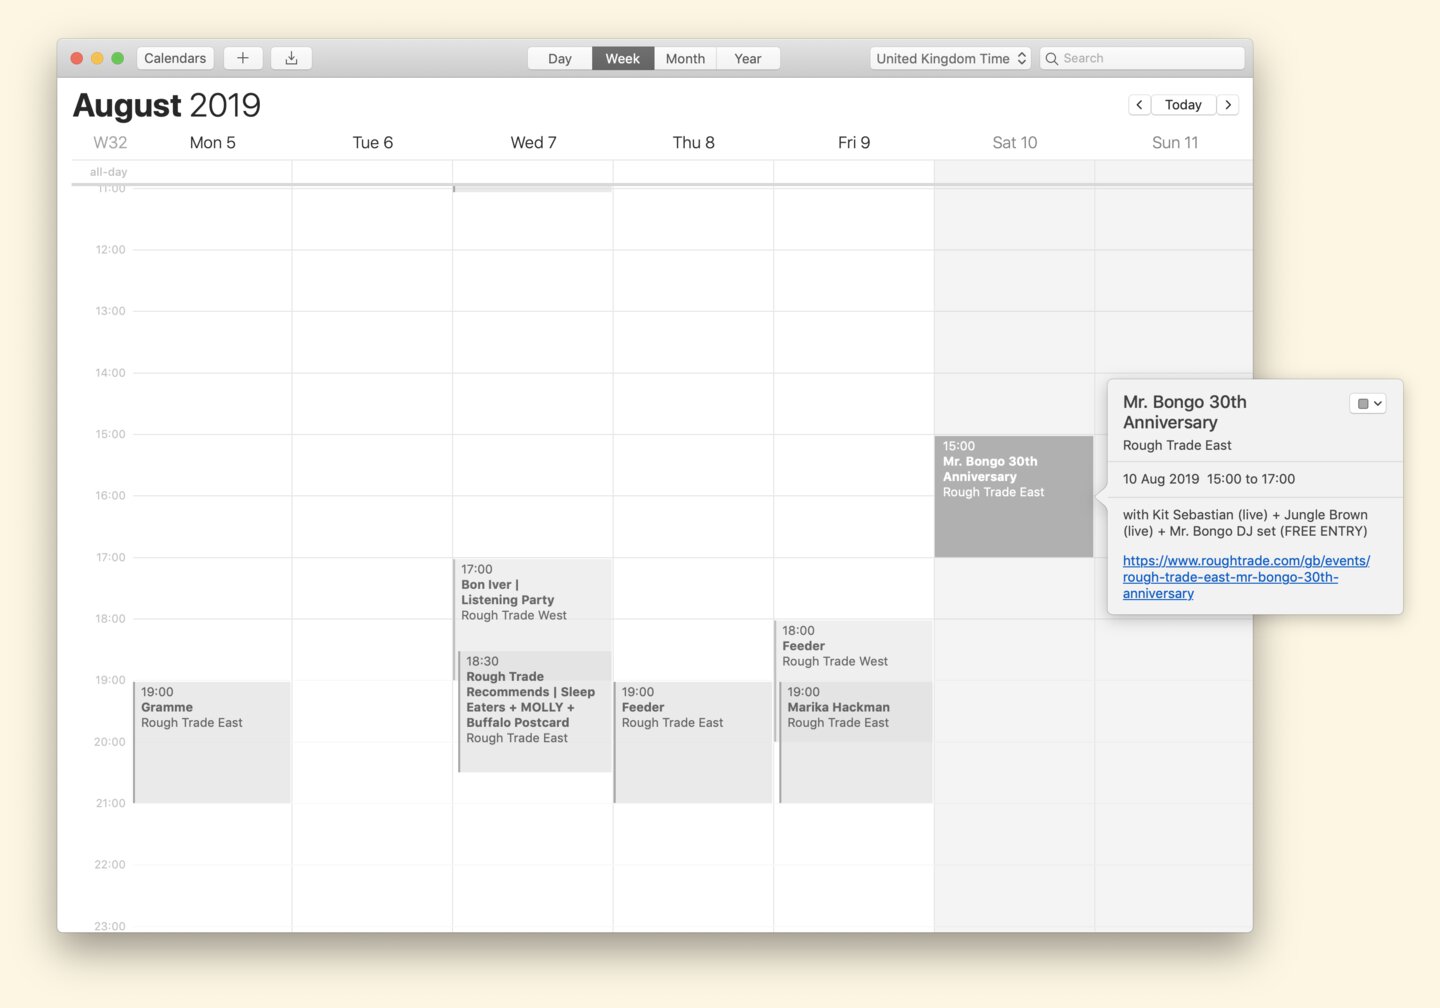 iCalendar feed in Apple's Calendar app